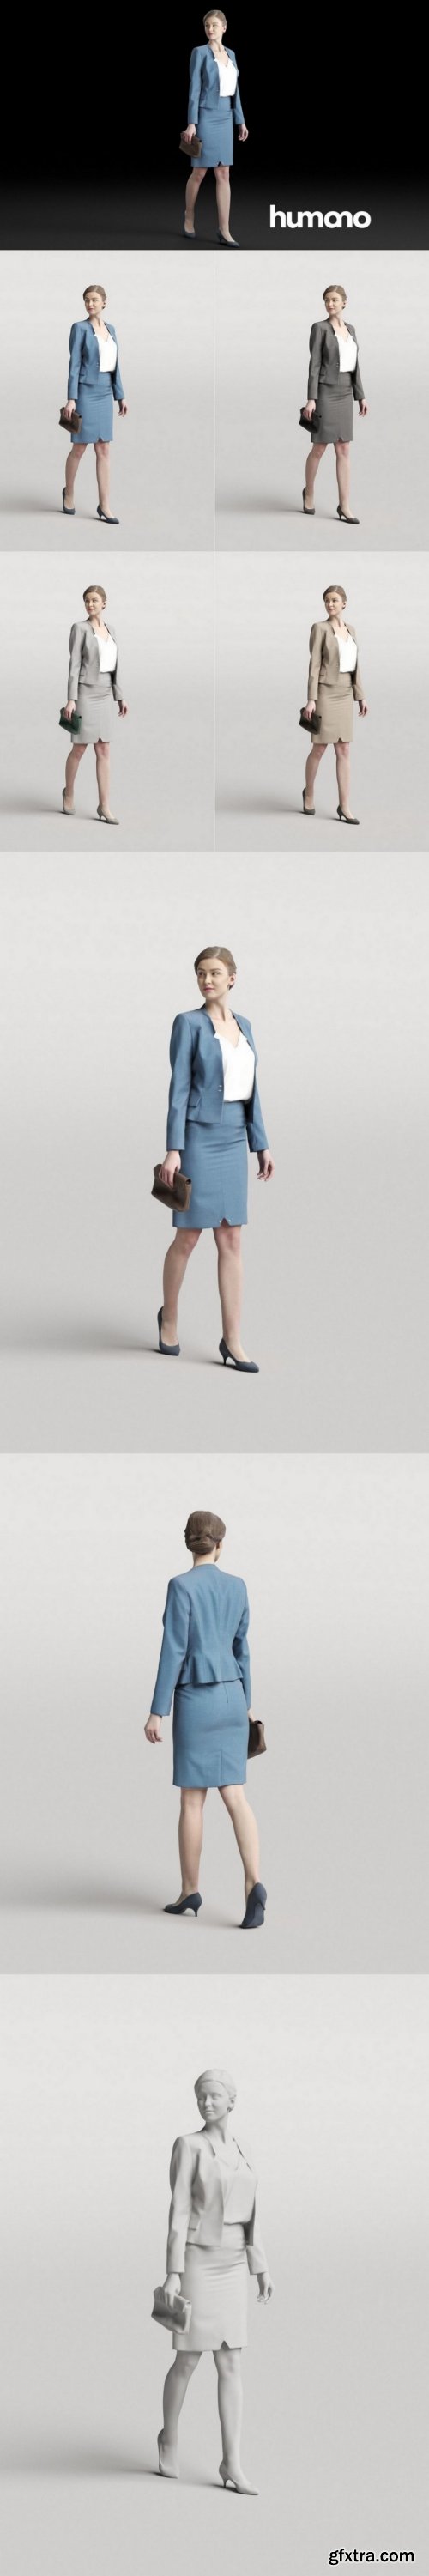 Humano Elegant woman in suit walking and talking 0301 3D model